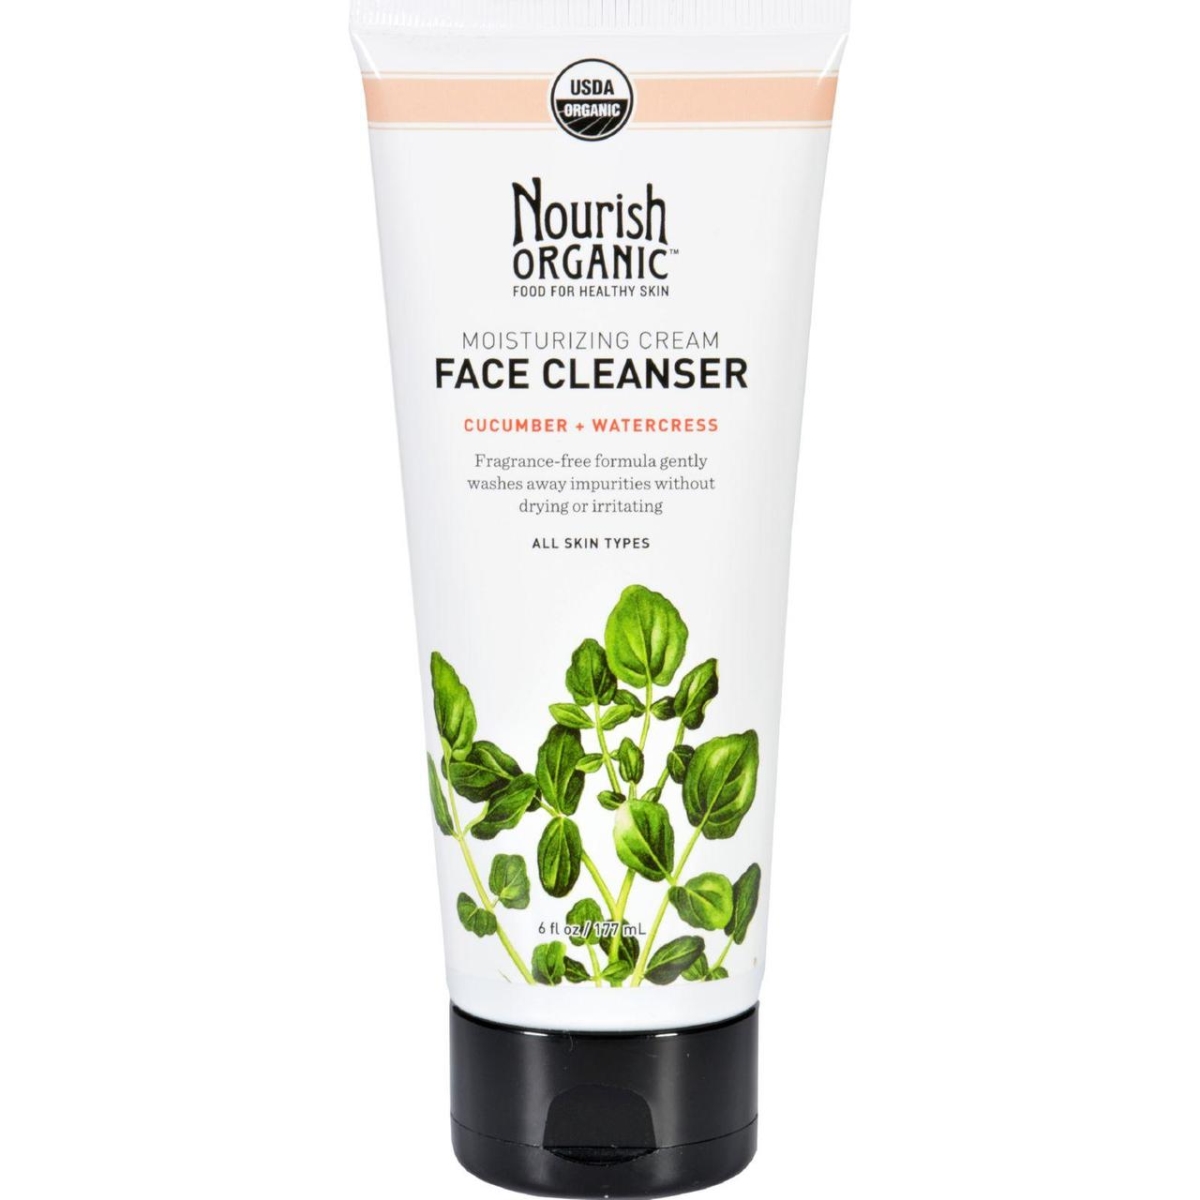 Nourish Hg1383660 6 Oz Organic Face Cleanser Moisturizing Cream, Cucumber & Watercress